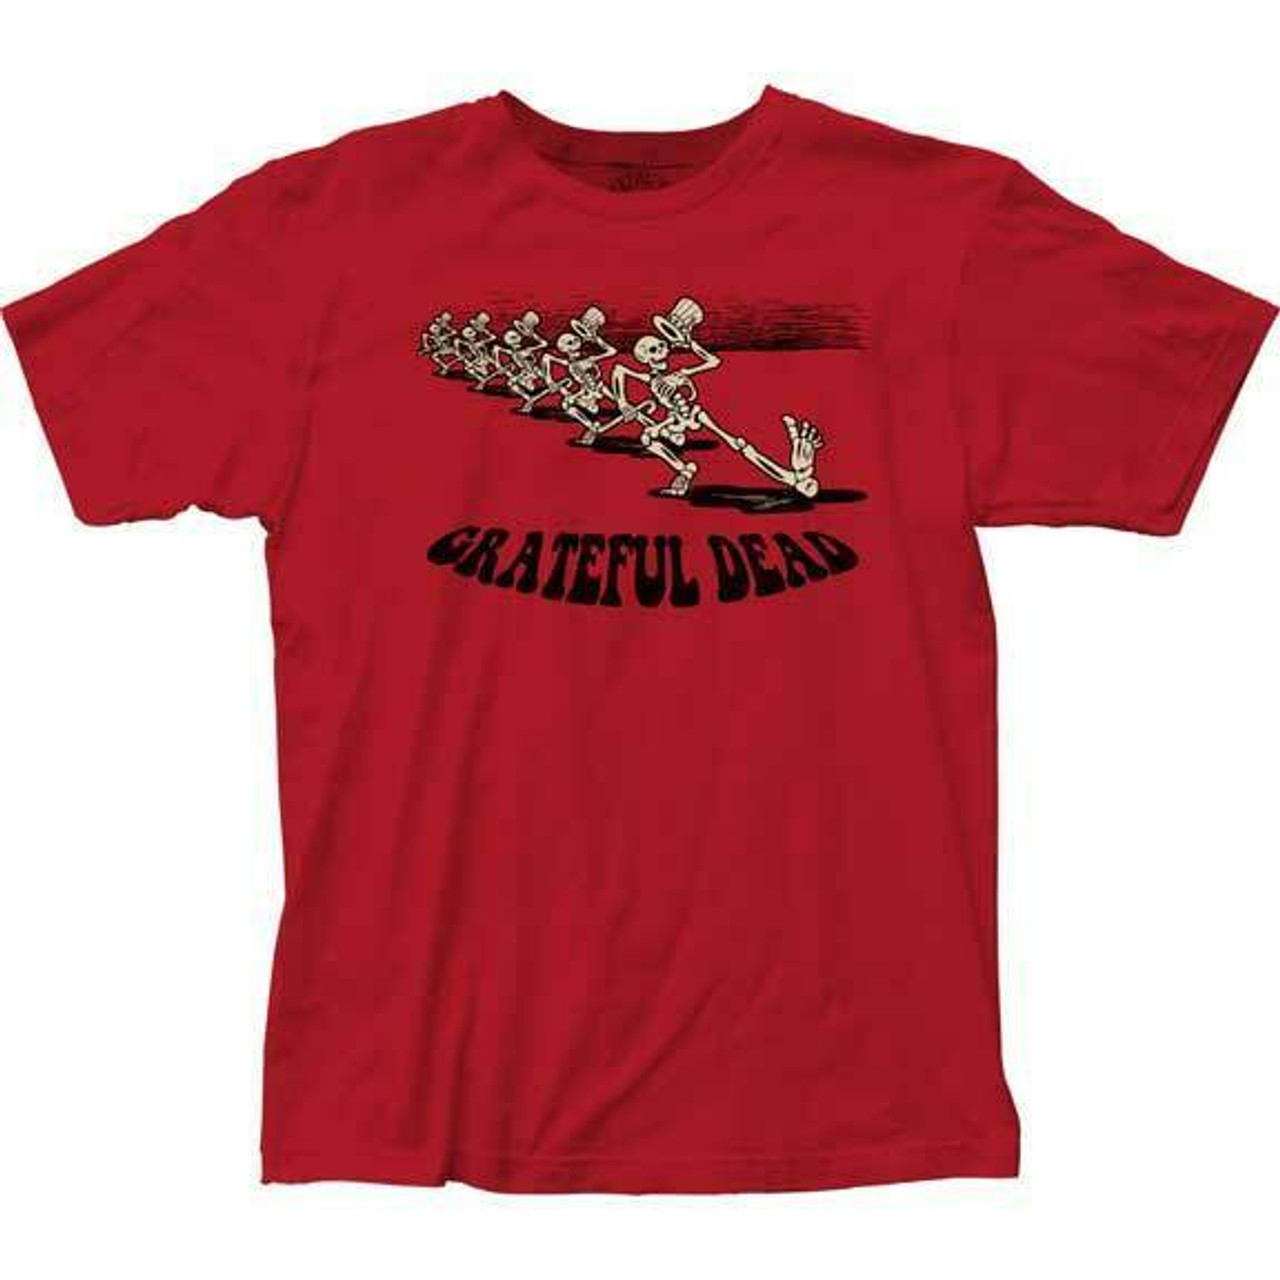 Impact Grateful Dead Skeleton Parade Psychedelic Rock Folk Music Band T Shirt GD33 - S Regular